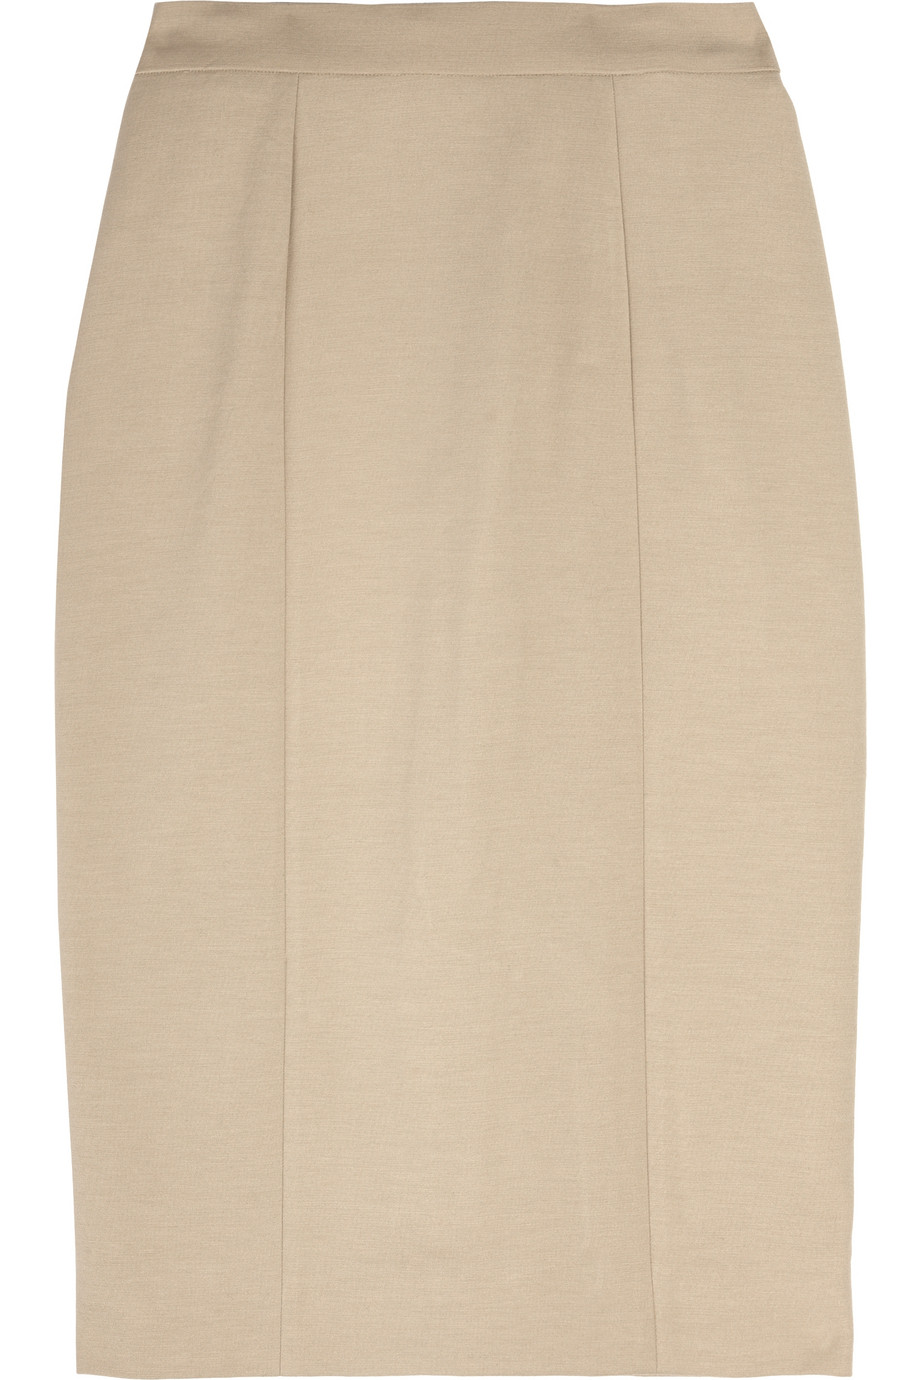 D&g Stretch Cotton-jersey Pencil Skirt in Beige | Lyst